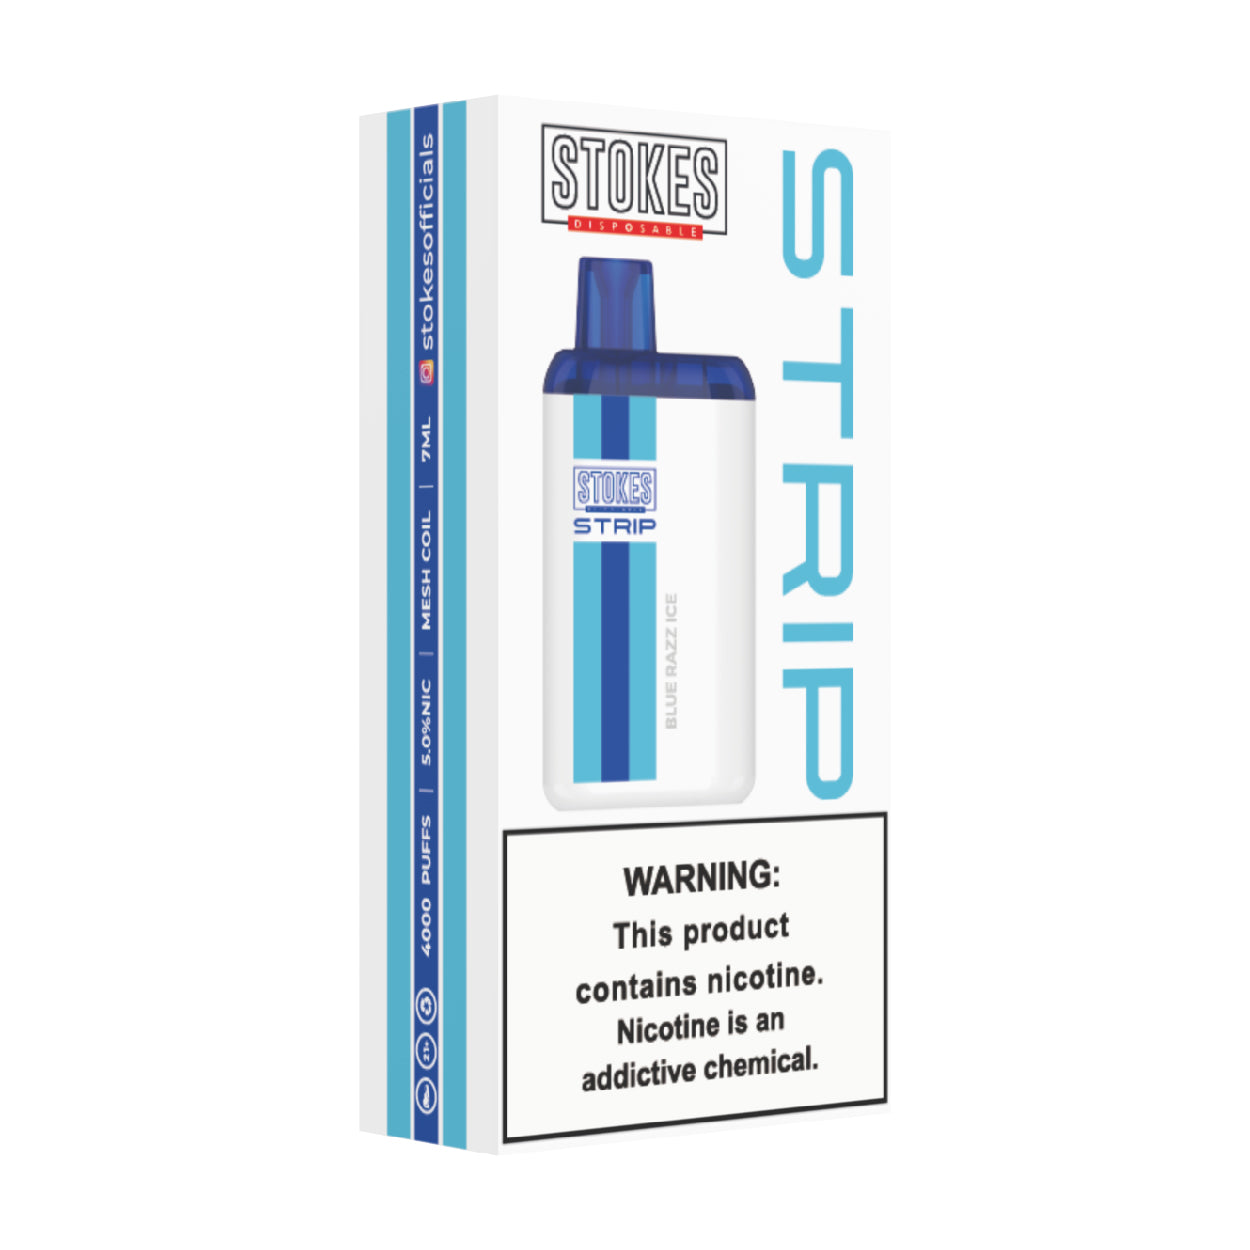 STOKES Strip - 5% Nic. (Disposable Device) - 4000 Puffs - Blue Razz Ice